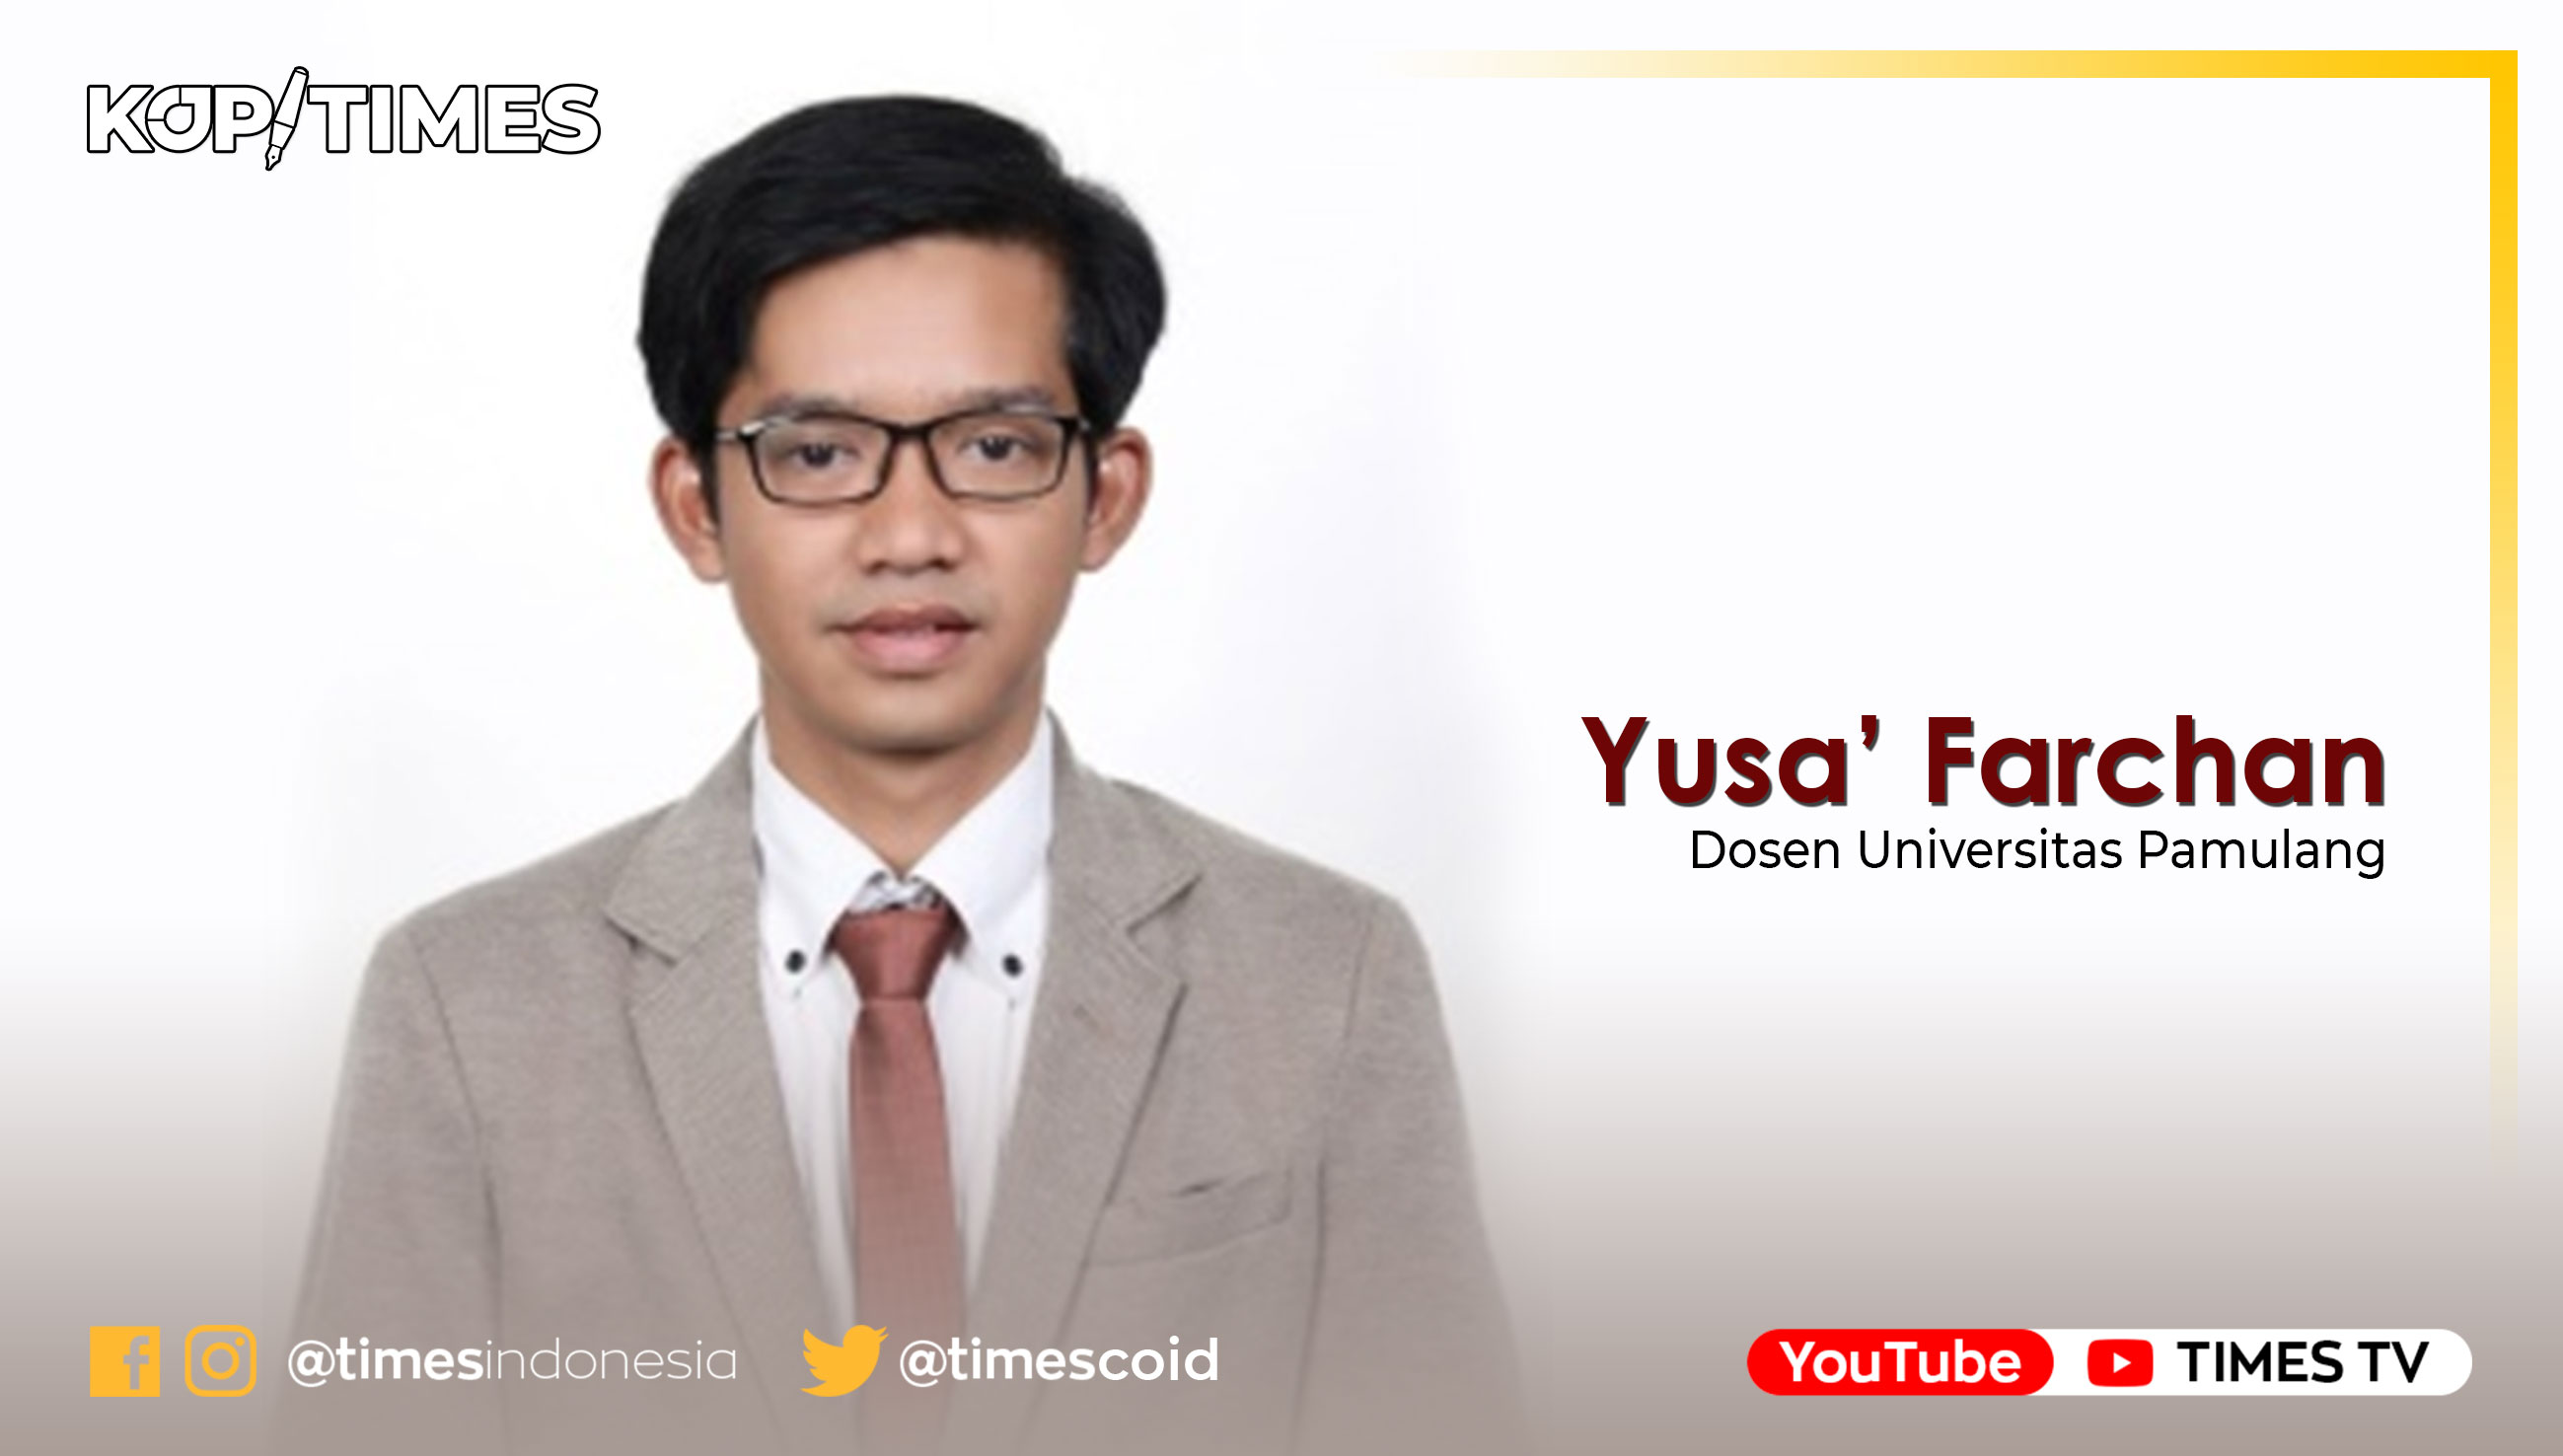 Yusa’ Farchan, Dosen Universitas Pamulang.